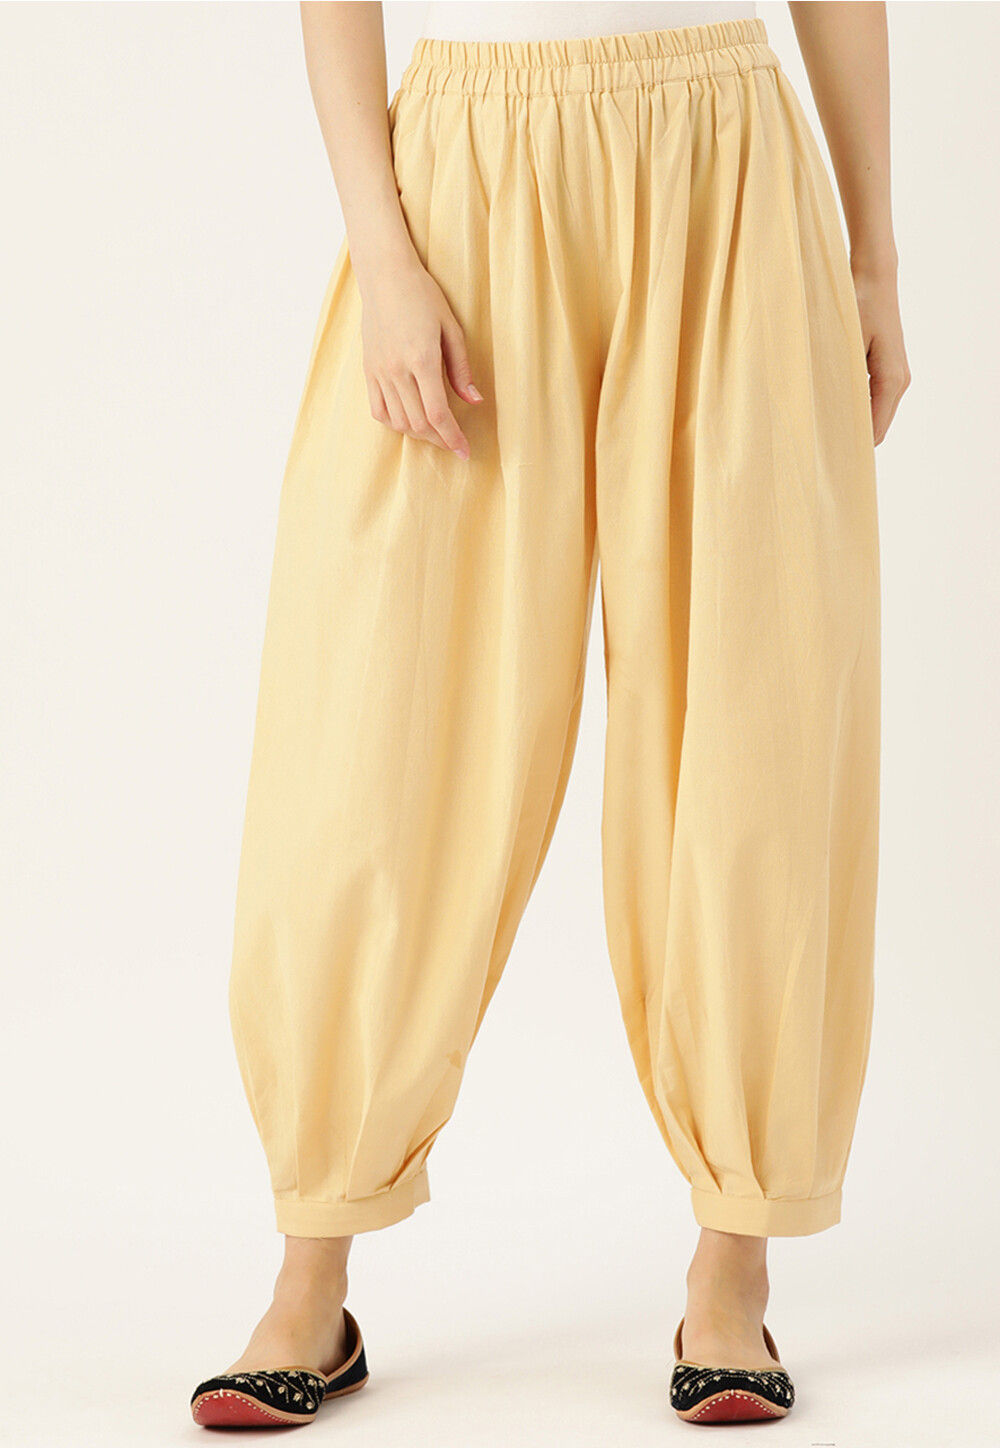 STYLE PITARA Cotton Comfort Punjabi Patiala Salwar Pants for Women Bottoms  Combo 2 - Free Size (Black,Babypink) Free Size : Amazon.in: Fashion